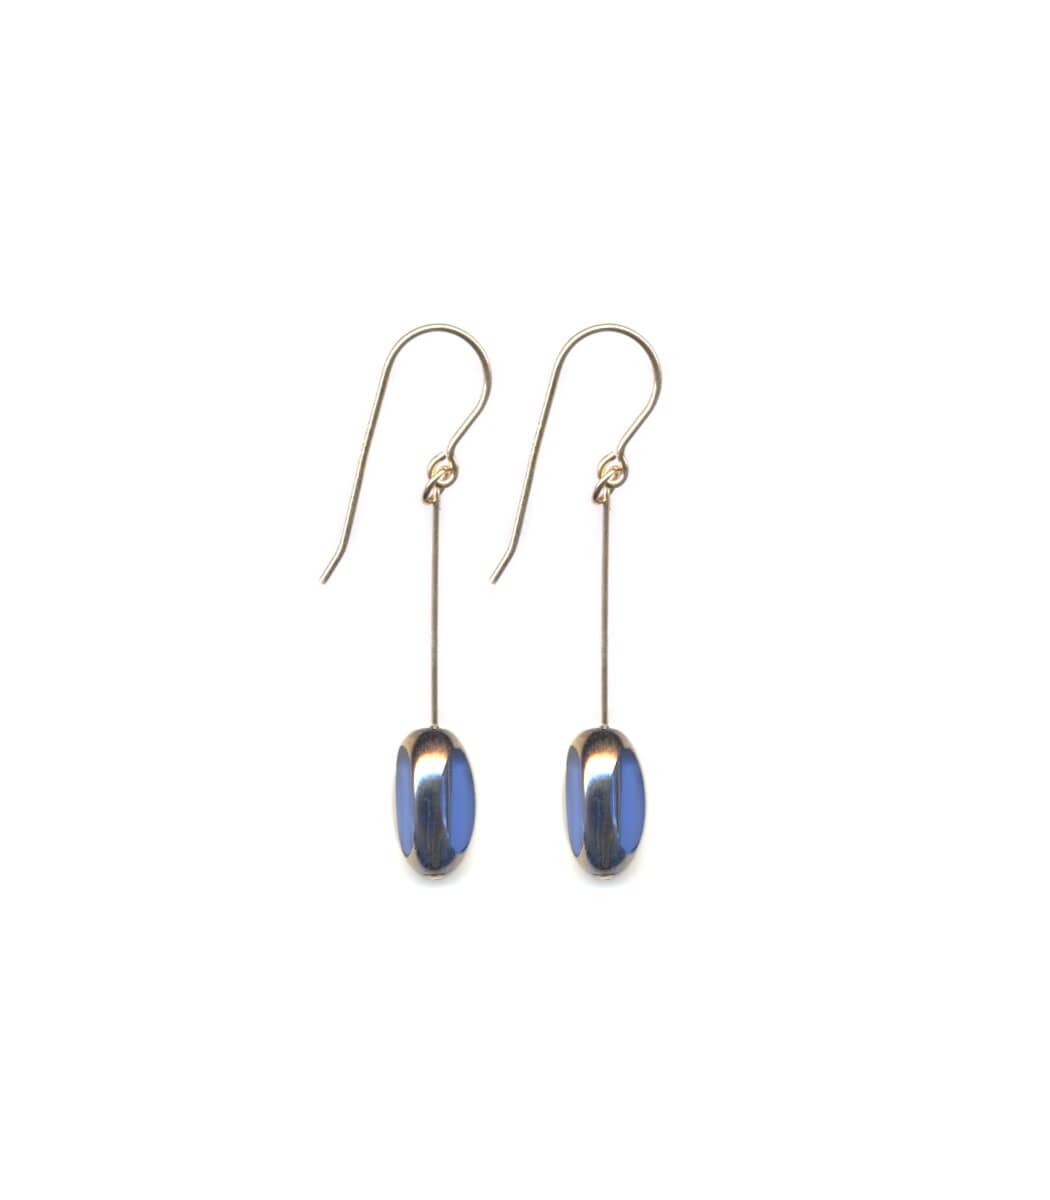 Irk Jewelry I. Ronni Kappos E1657 Jewel Blue Bean Earrings